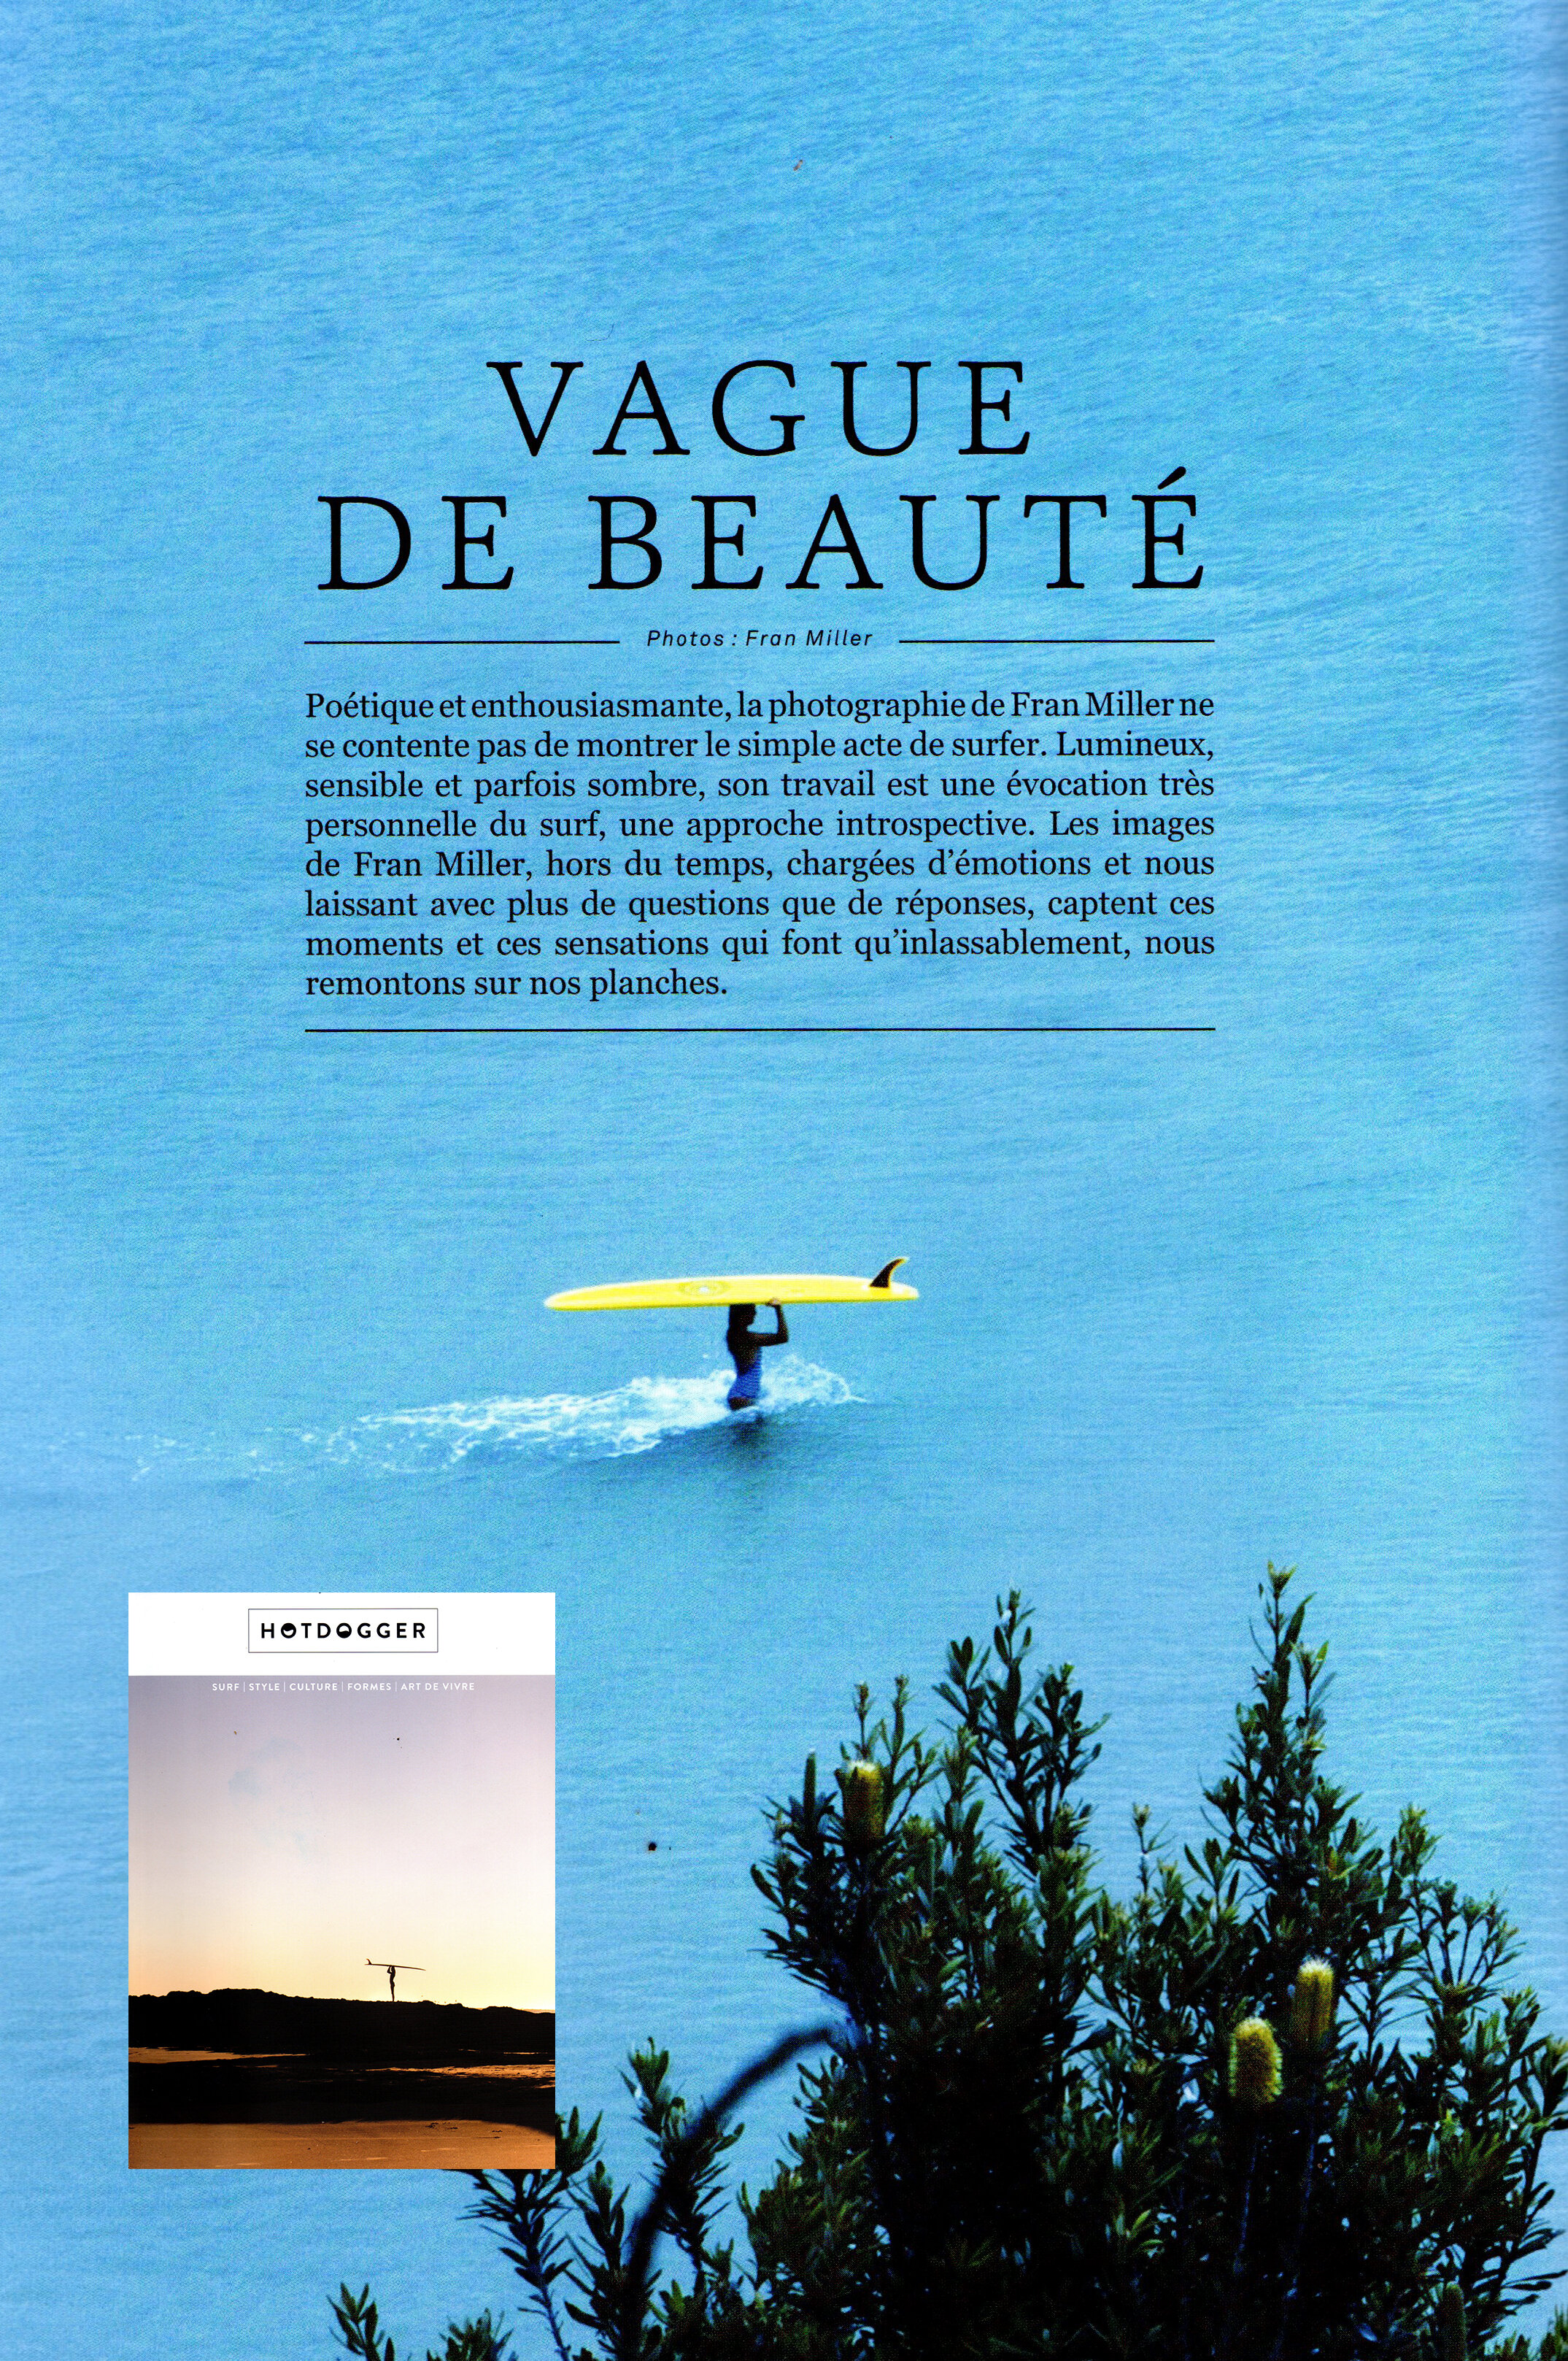 Hotdogger_Magazine_vague_de_beaute_fran_miller_portfolio.jpg